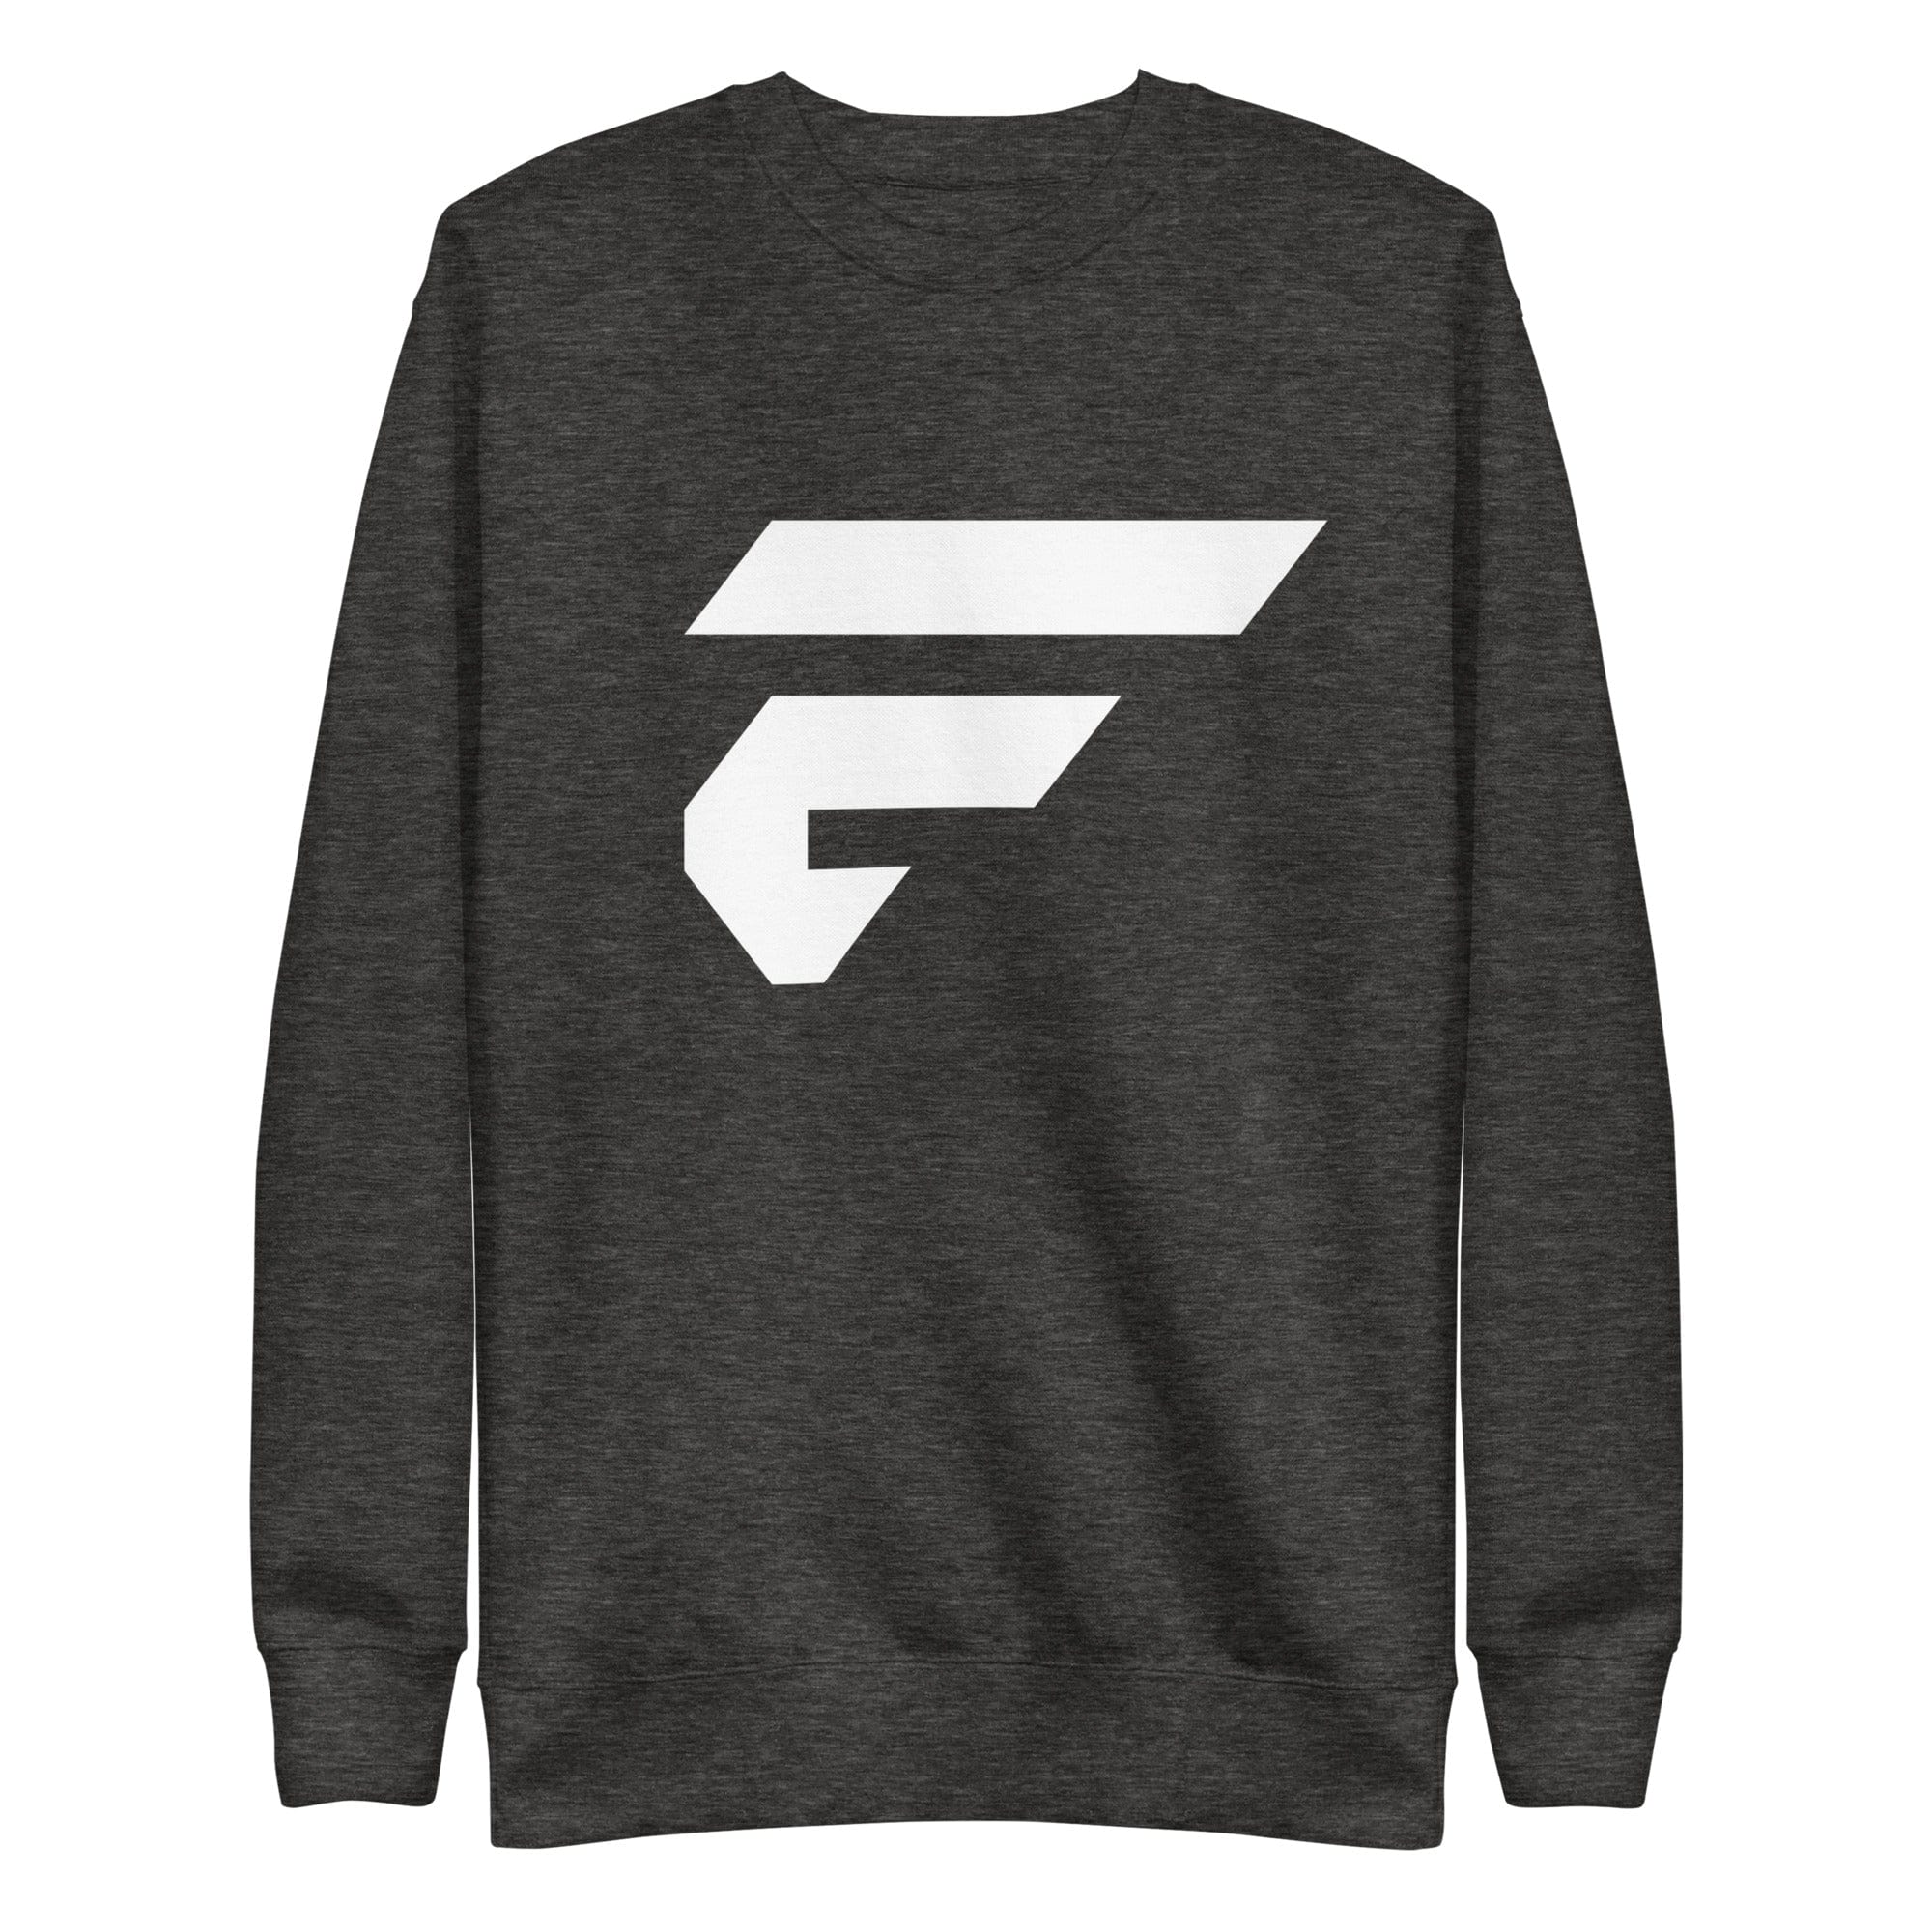 Dark heathered grey unisex sweatshirt with Fire Cornhole F logo in white